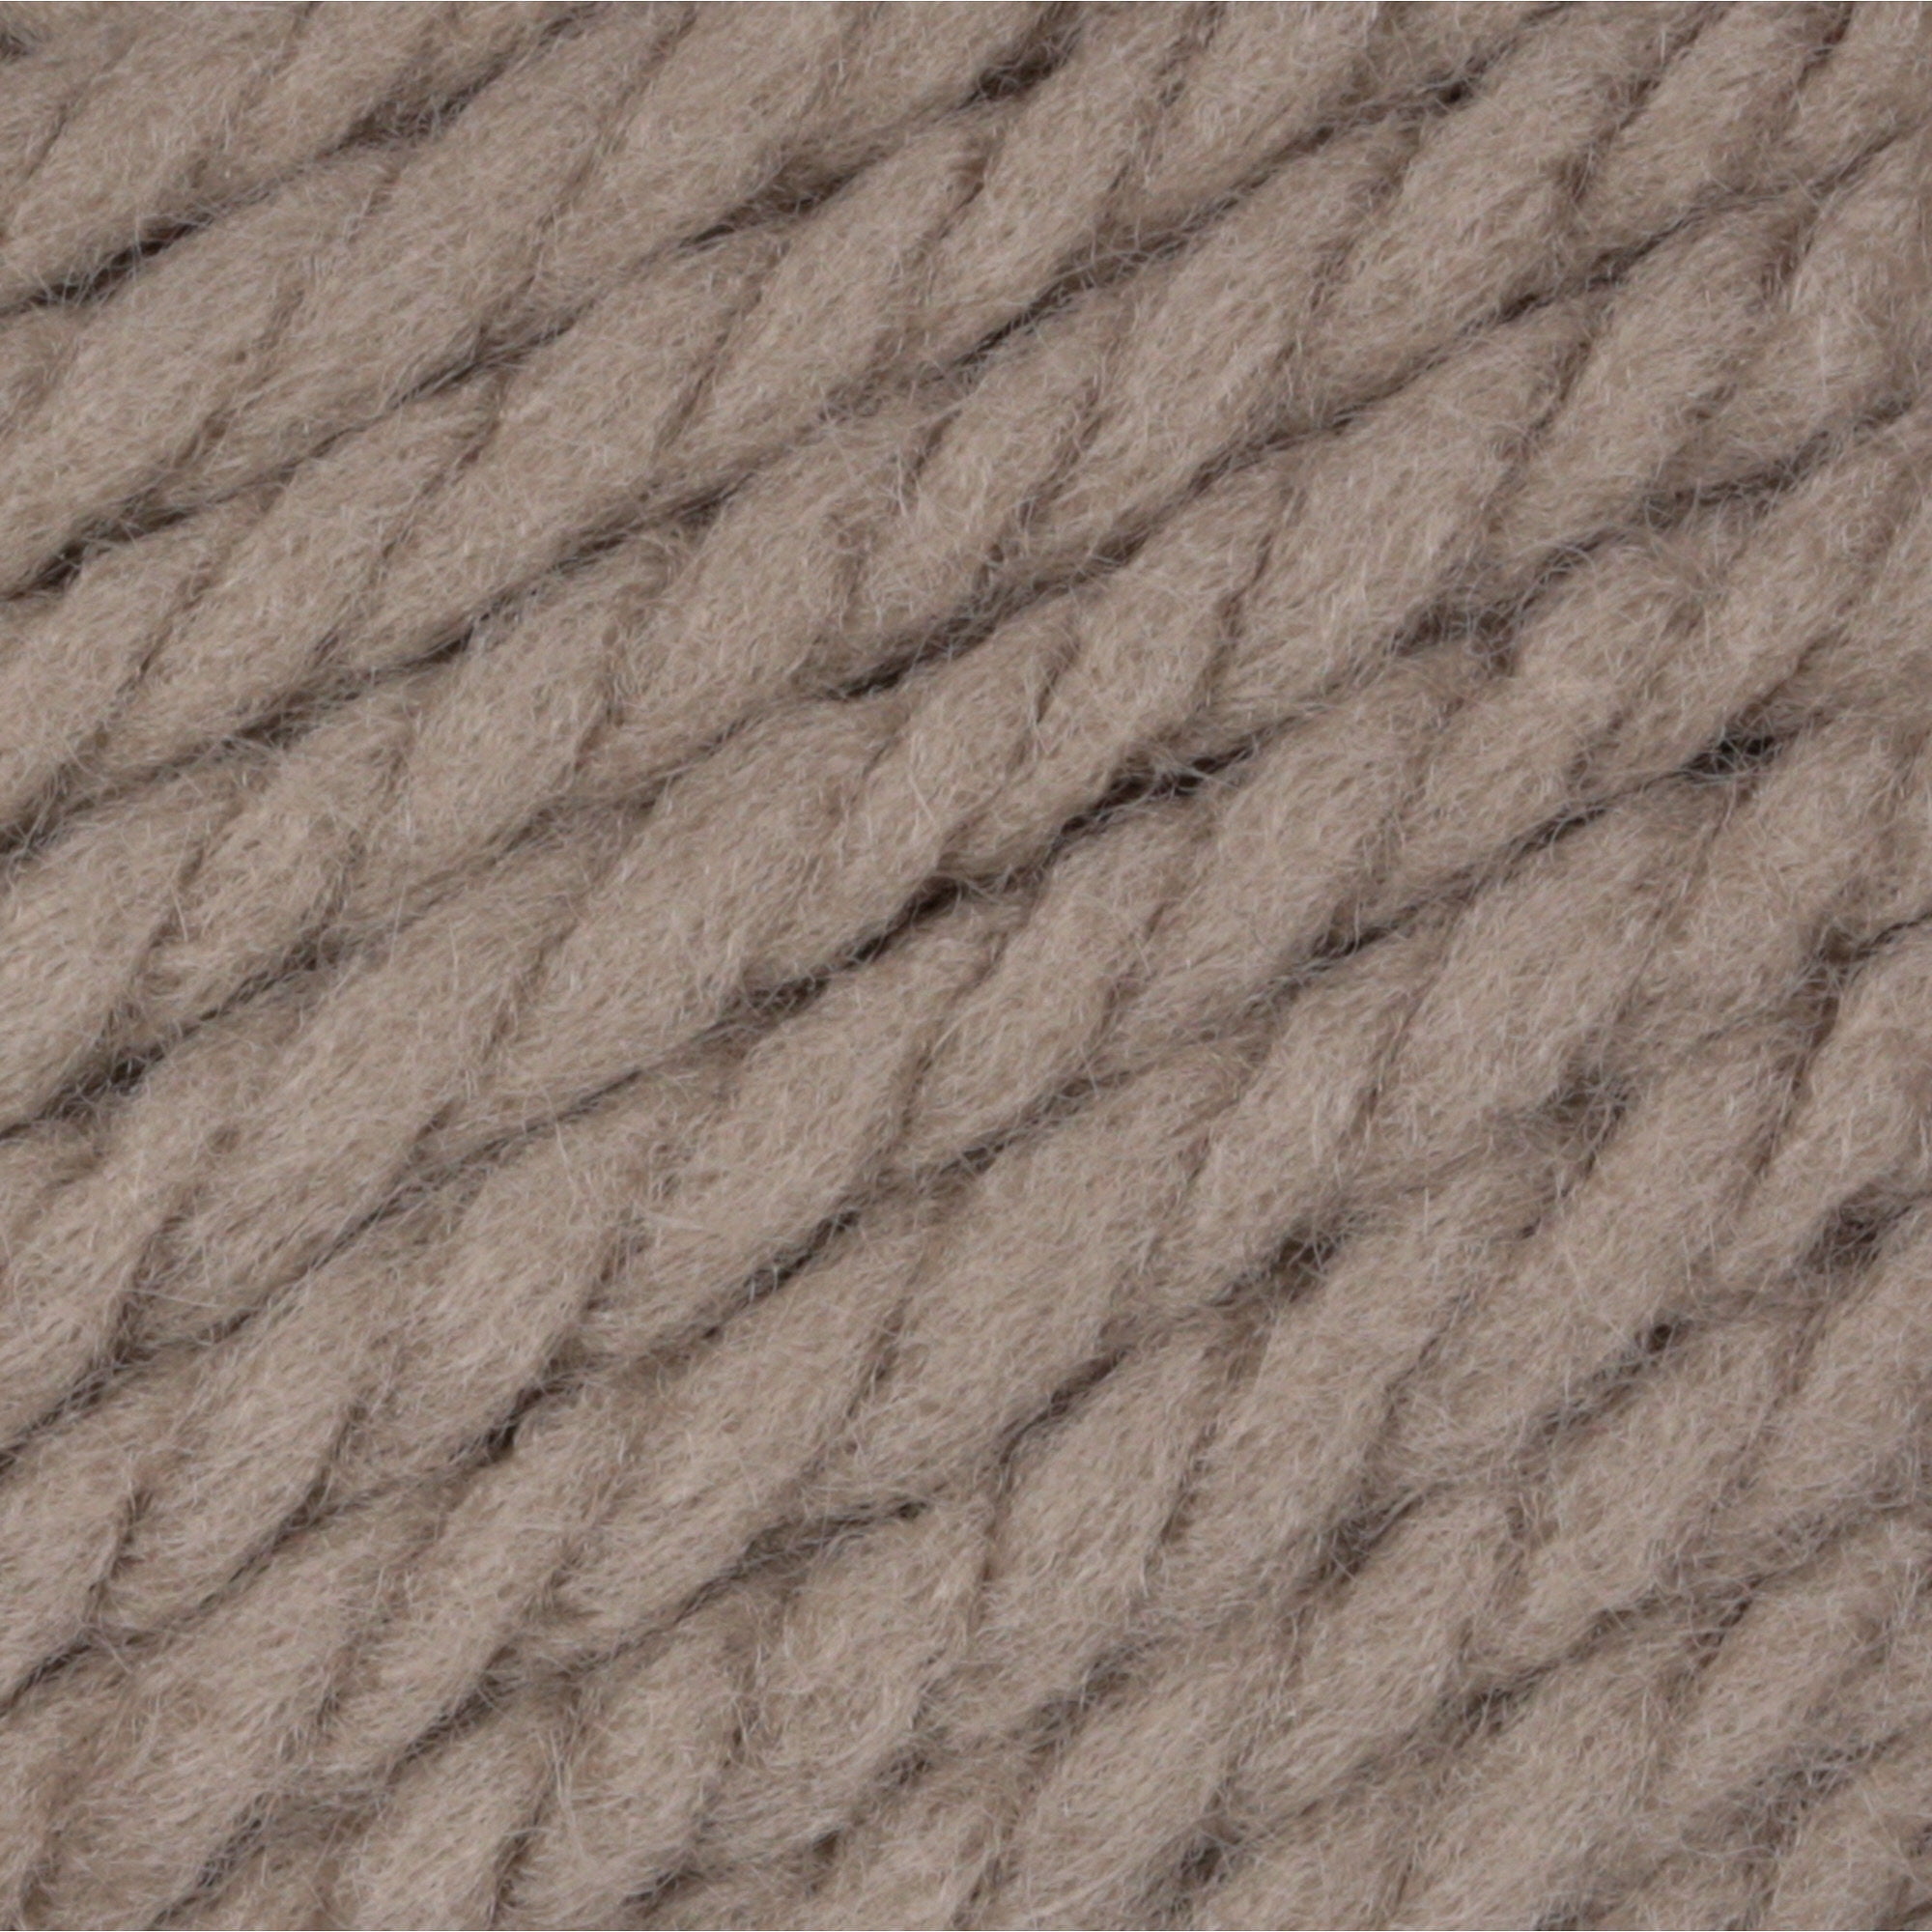 Bernat Softee Chunky Big Ball Yarn - Solids-True Grey, 1 count - Harris  Teeter